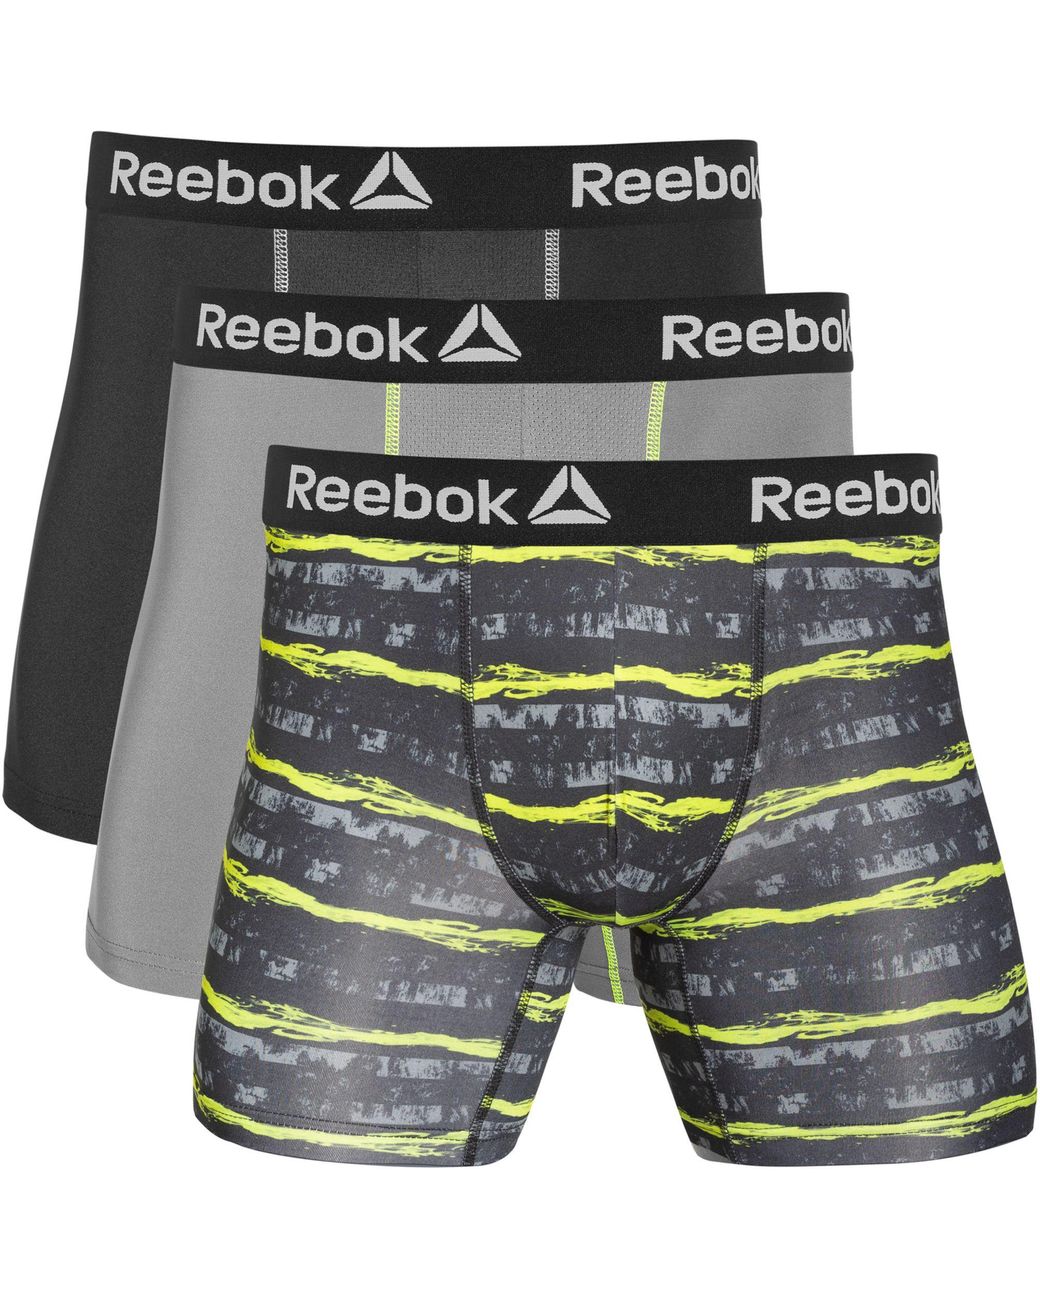 Reebok Performance 6'' Boxer Briefs – 3 Pack in Black/Neon Lime (Black ...